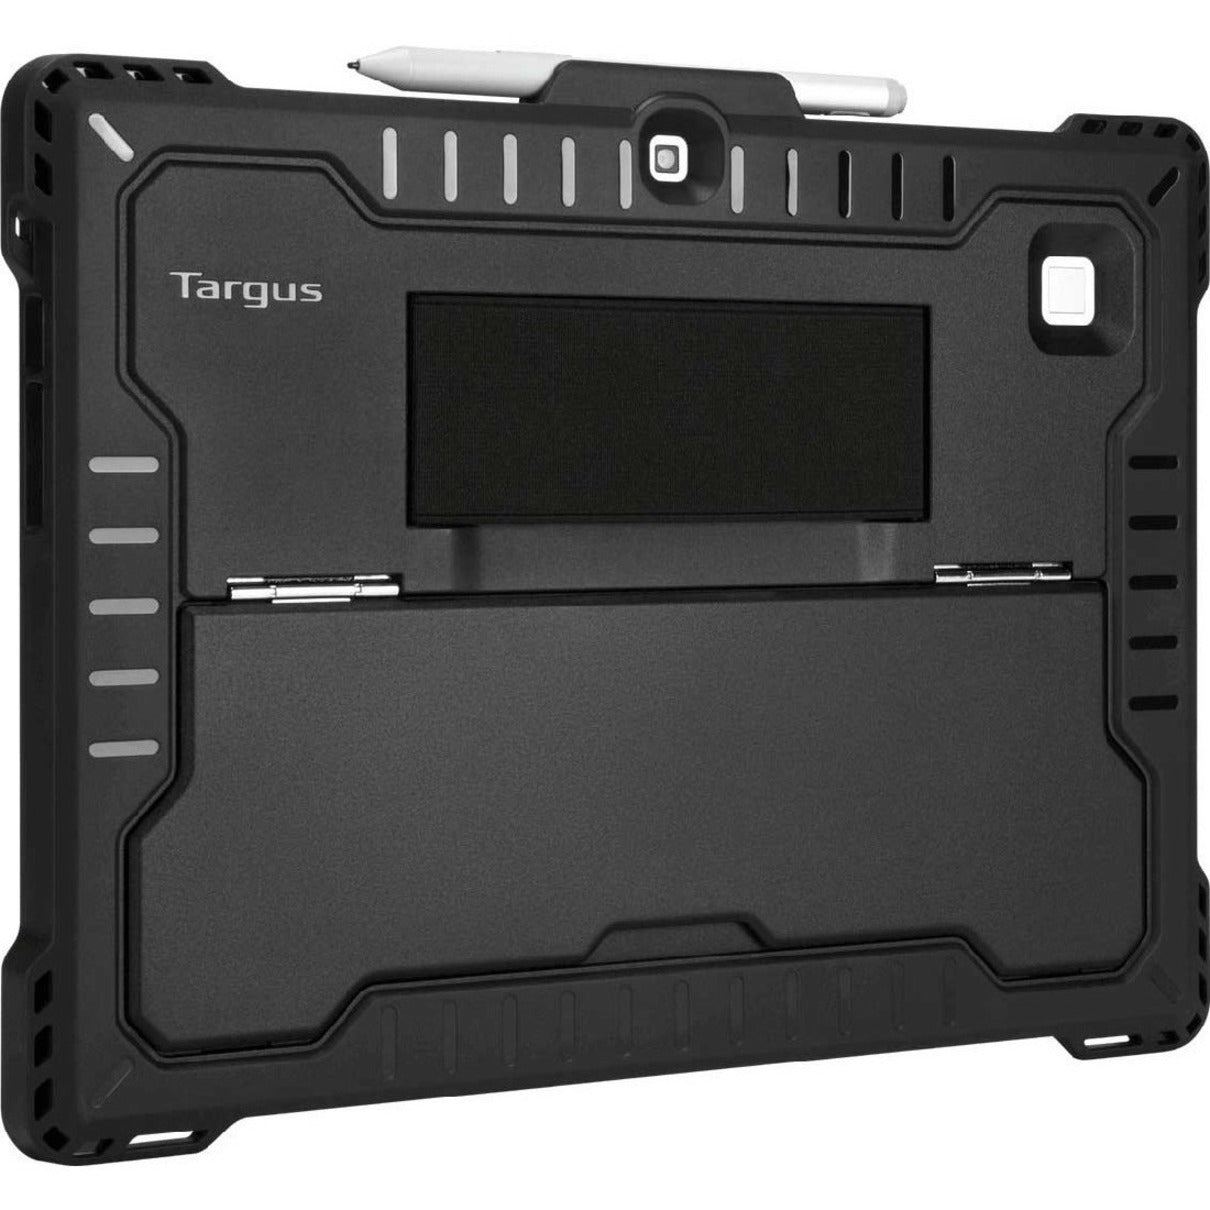 Targus THZ790GL 商用级平板电脑保护套 适用于 HP Elite x2 1013 G3 针对触控笔和平板电脑的坚固携带套